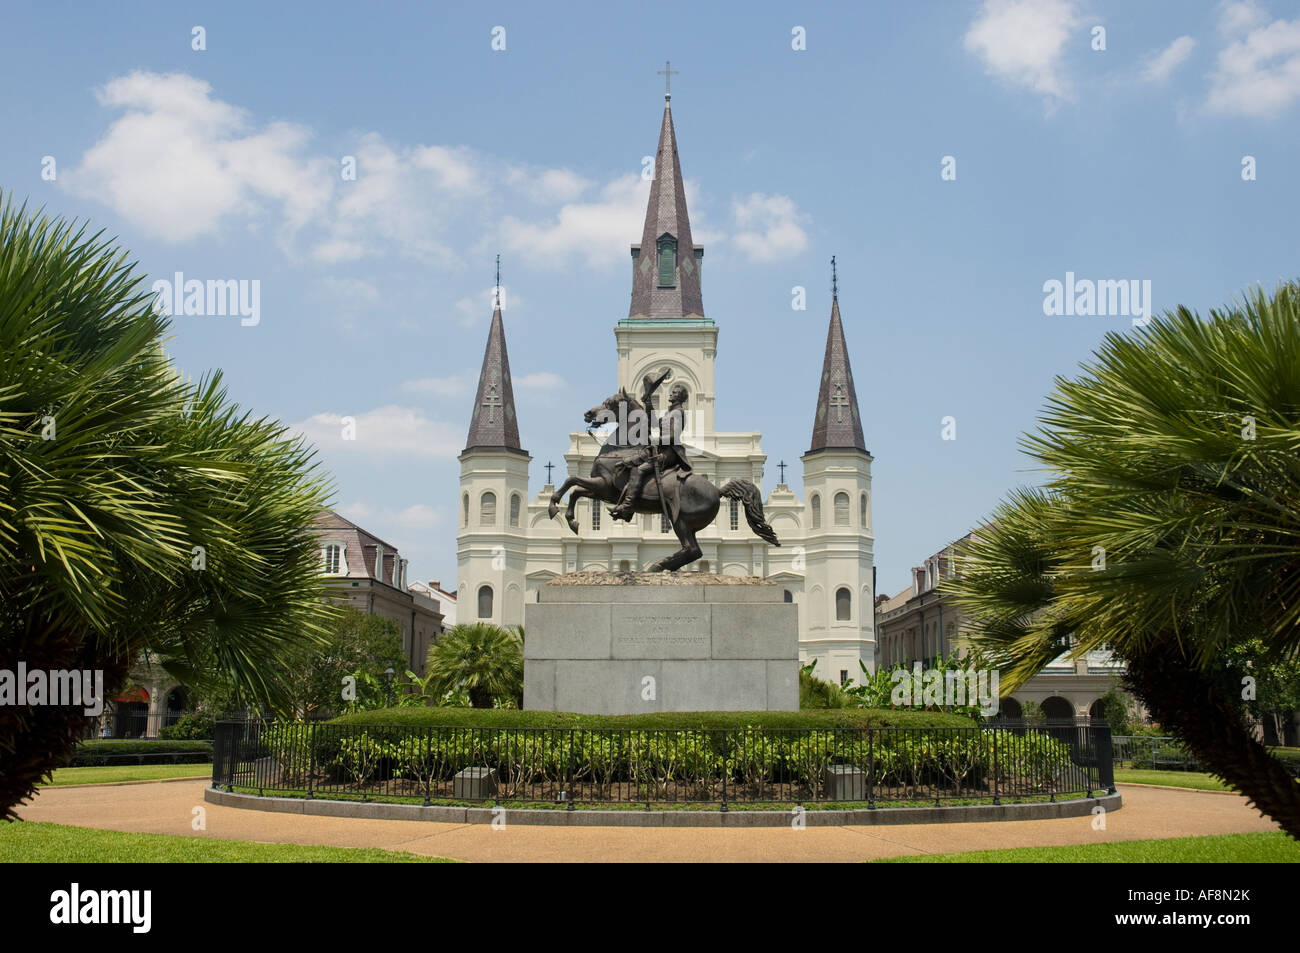 La estatua de Andrew Jackson en frente de la Catedral de Saint Louis. Nueva Orleáns, Louisiana Foto de stock